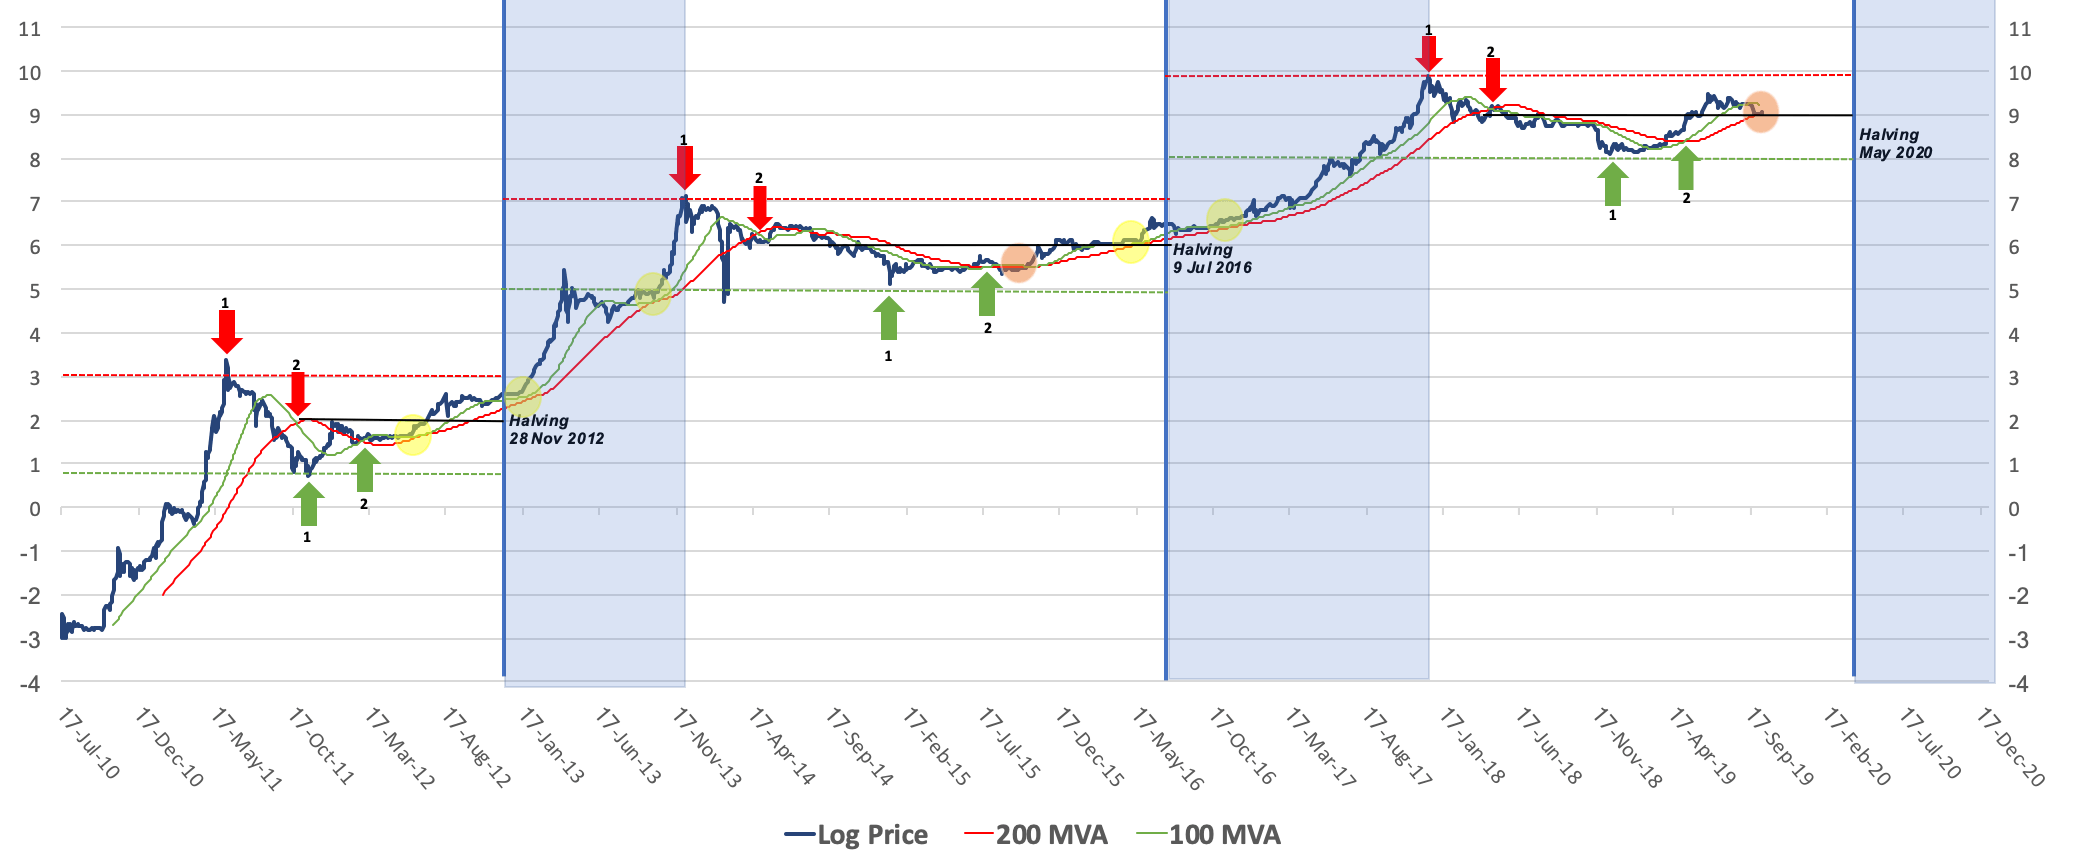 Bitcoin Log Price Chart Analysis: A thorough investigation